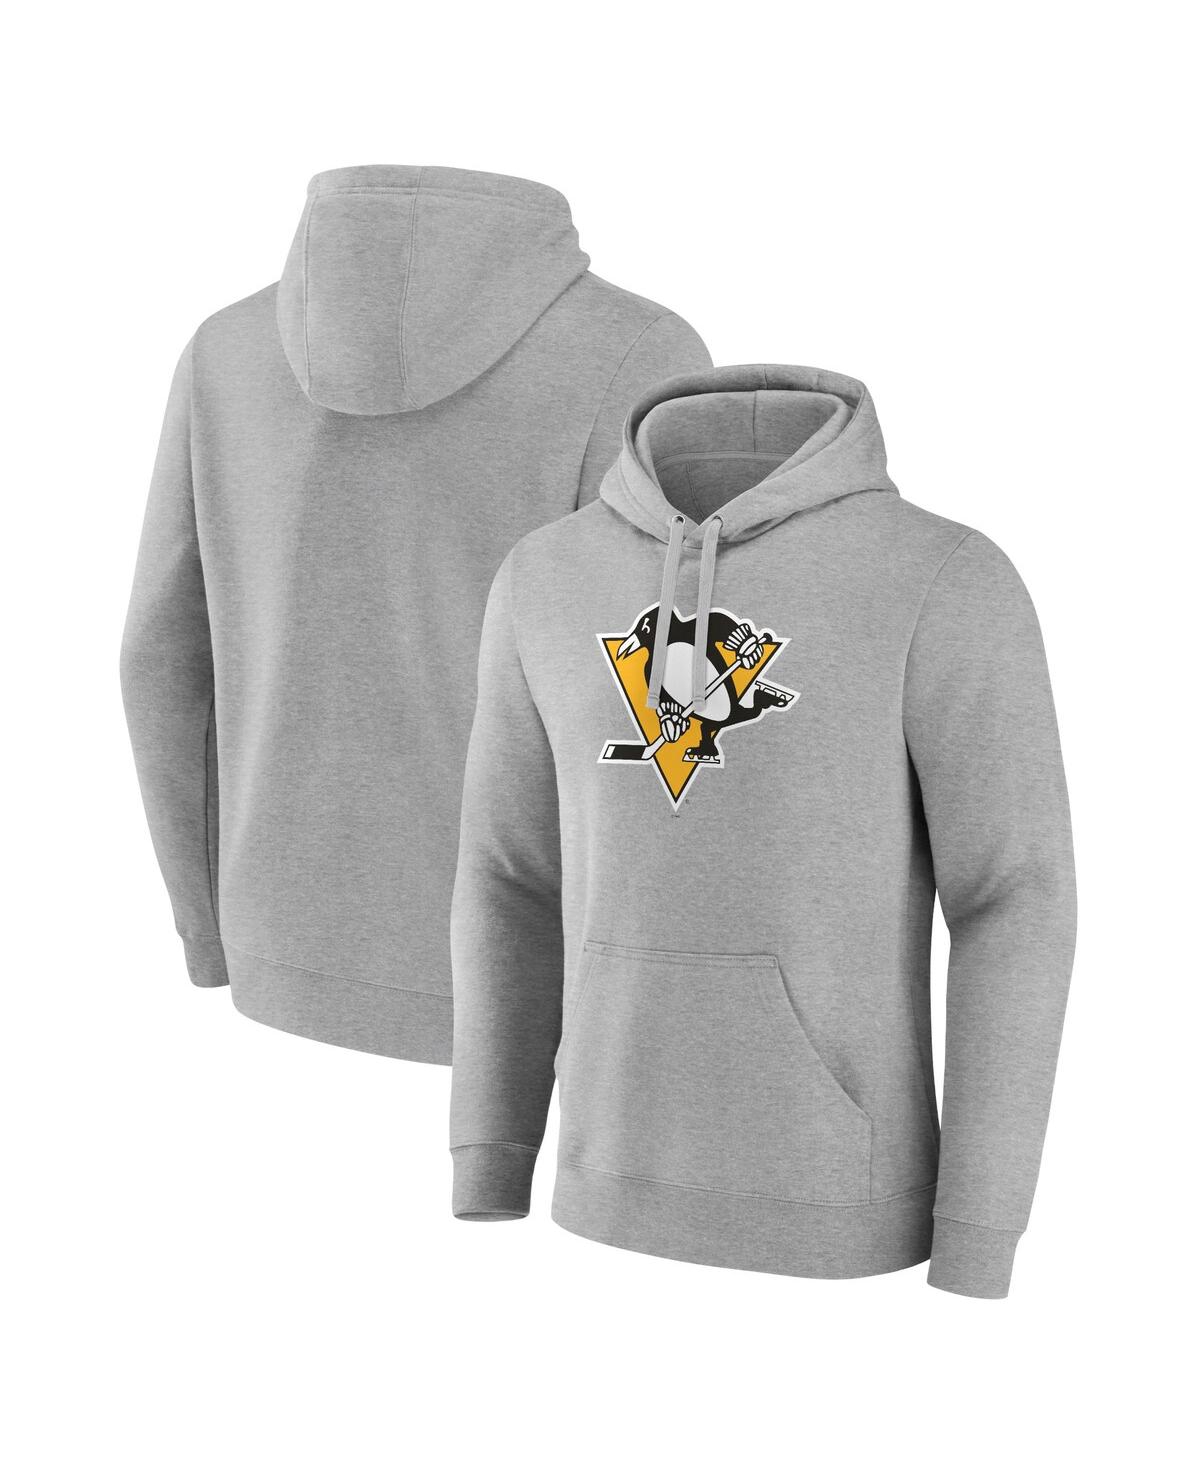 Men's Fanatics Heather Gray Pittsburgh Penguins Primary Logo Pullover Hoodie - Heather Gray